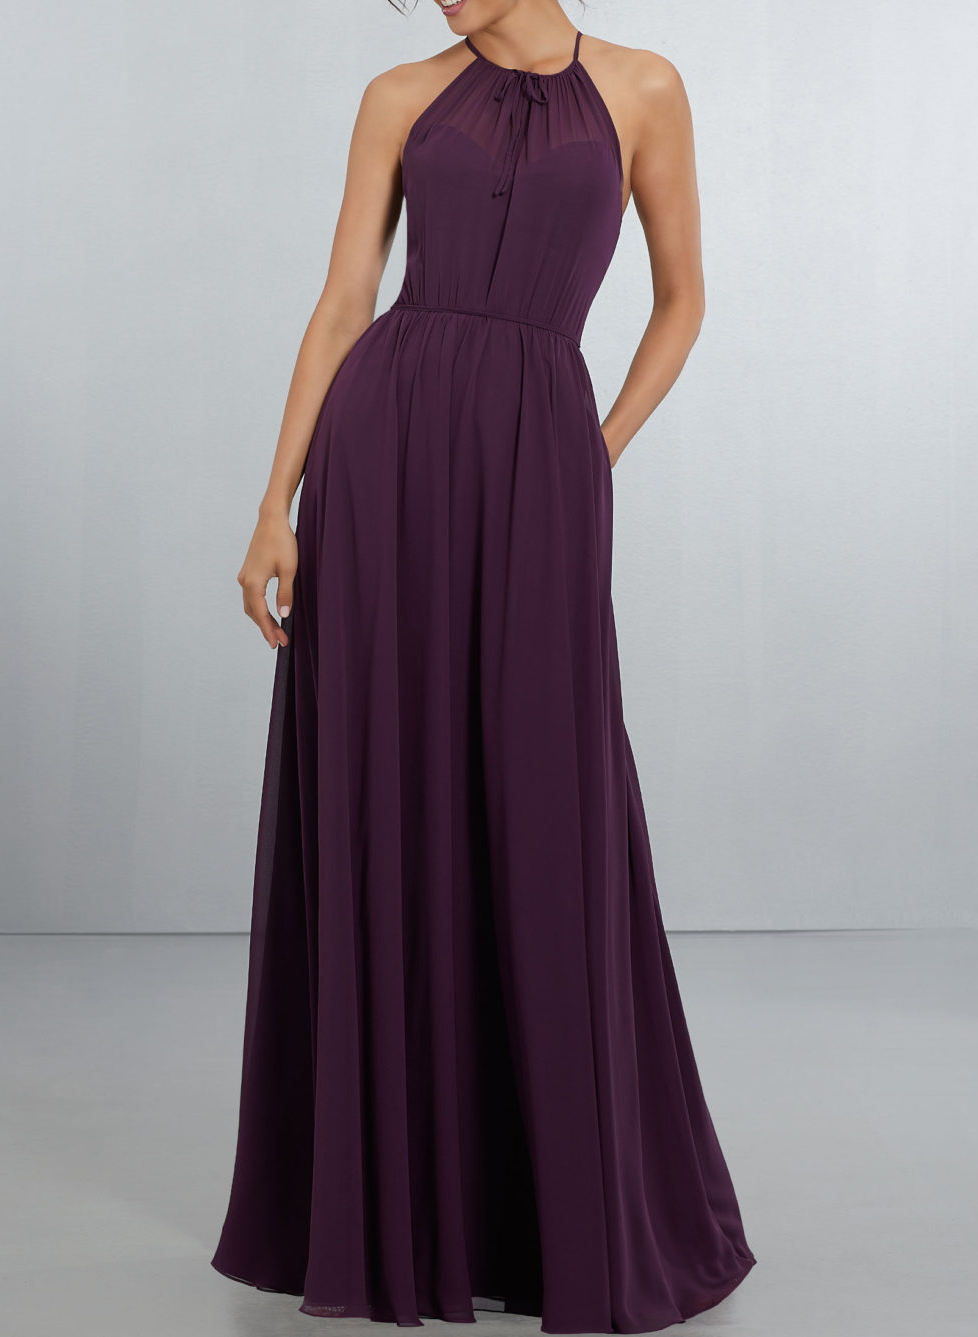 Purple A-Line Bridesmaid Dresses With Chiffon